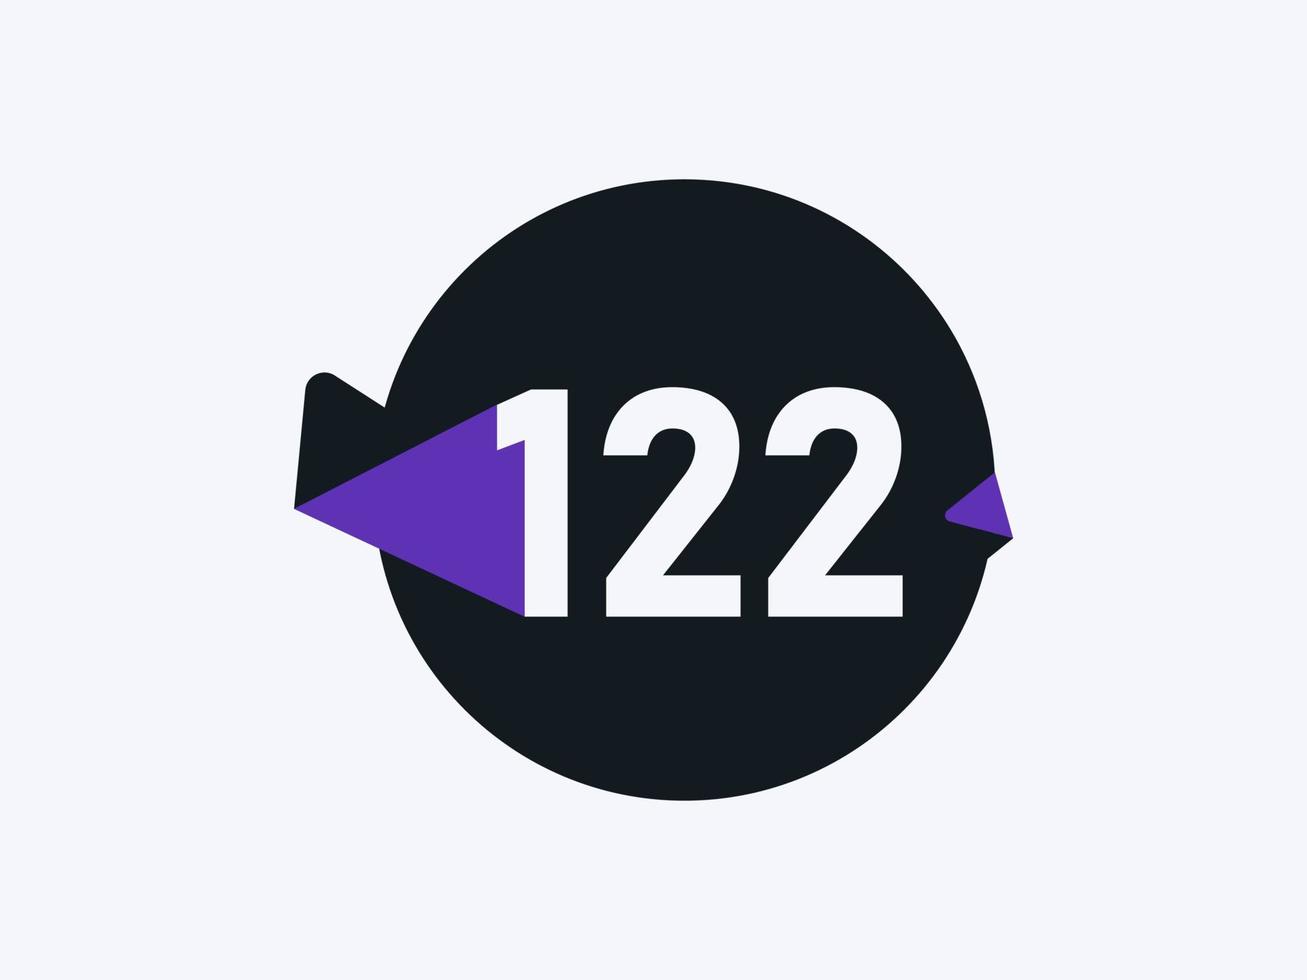 122 Number logo icon design vector image. Number logo icon design vector image